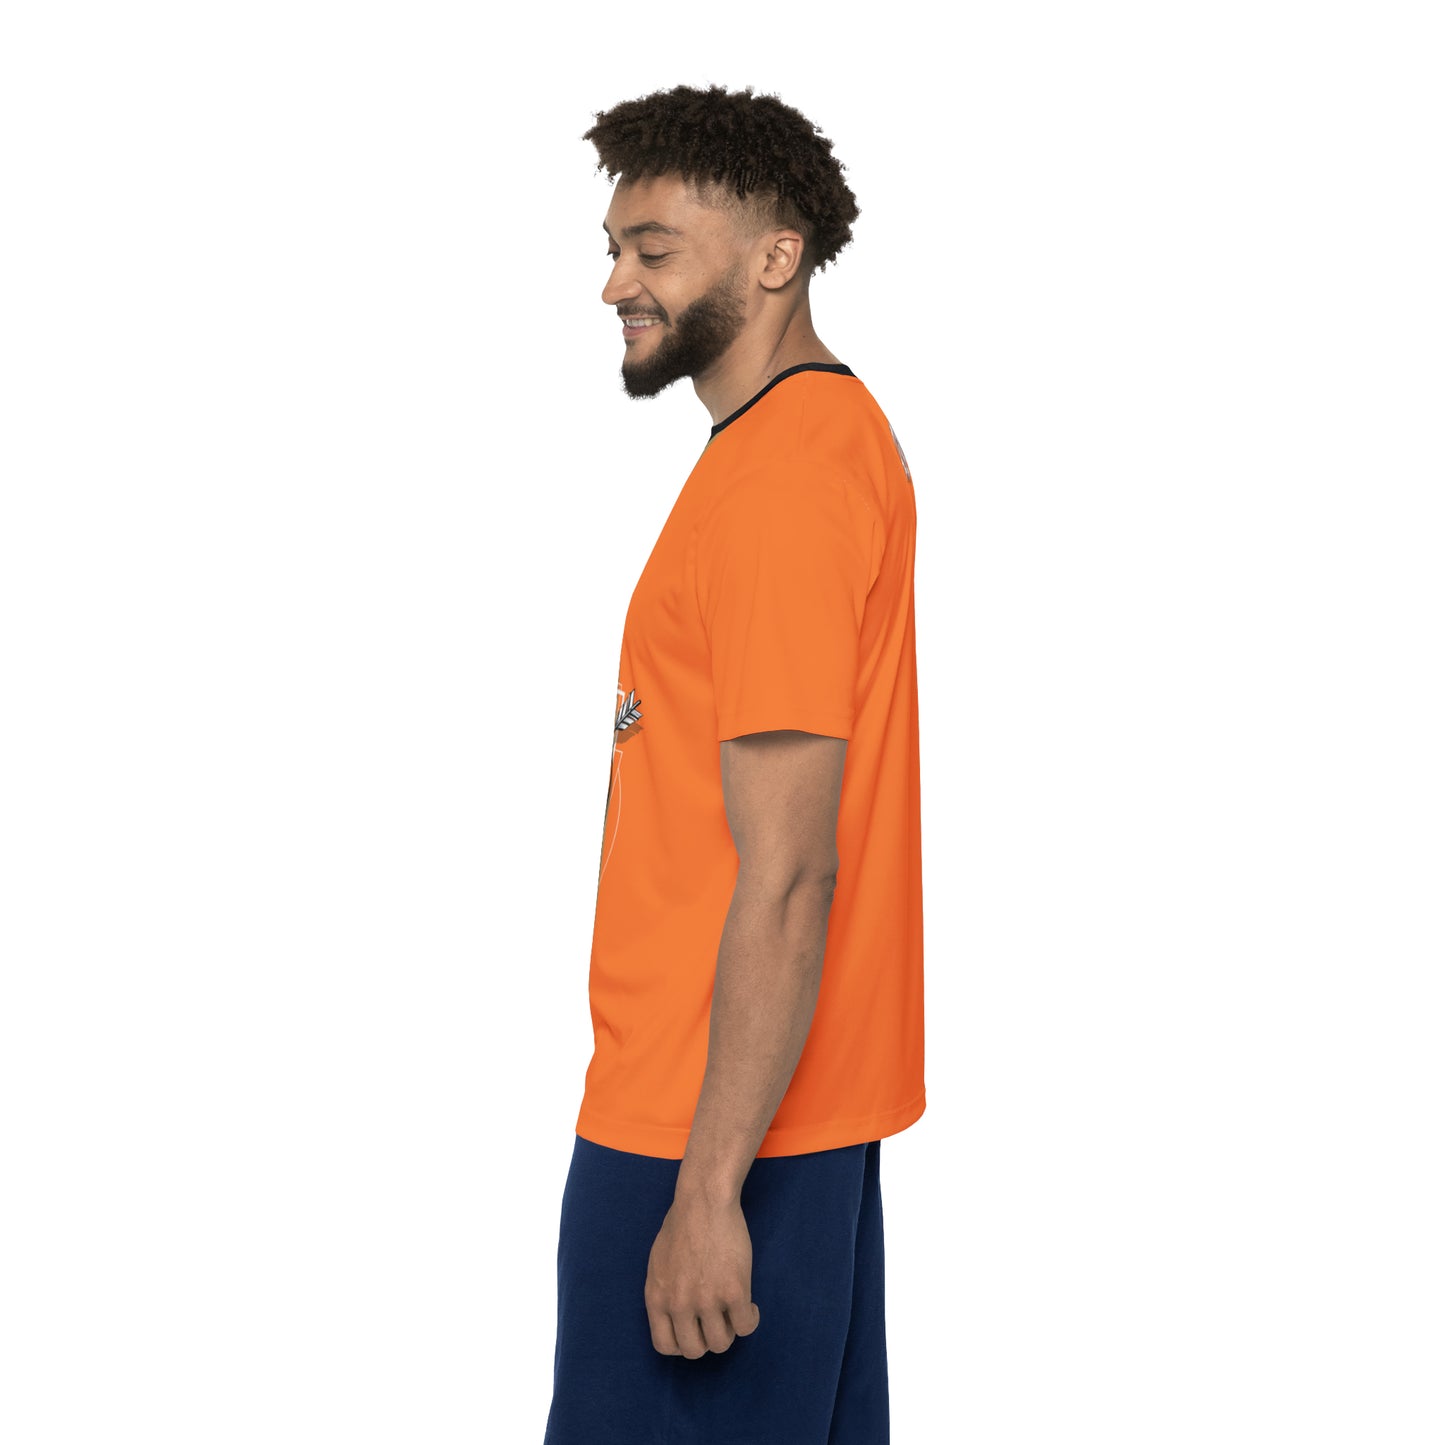 Viper Men's Performance T-shirt Orange Edition